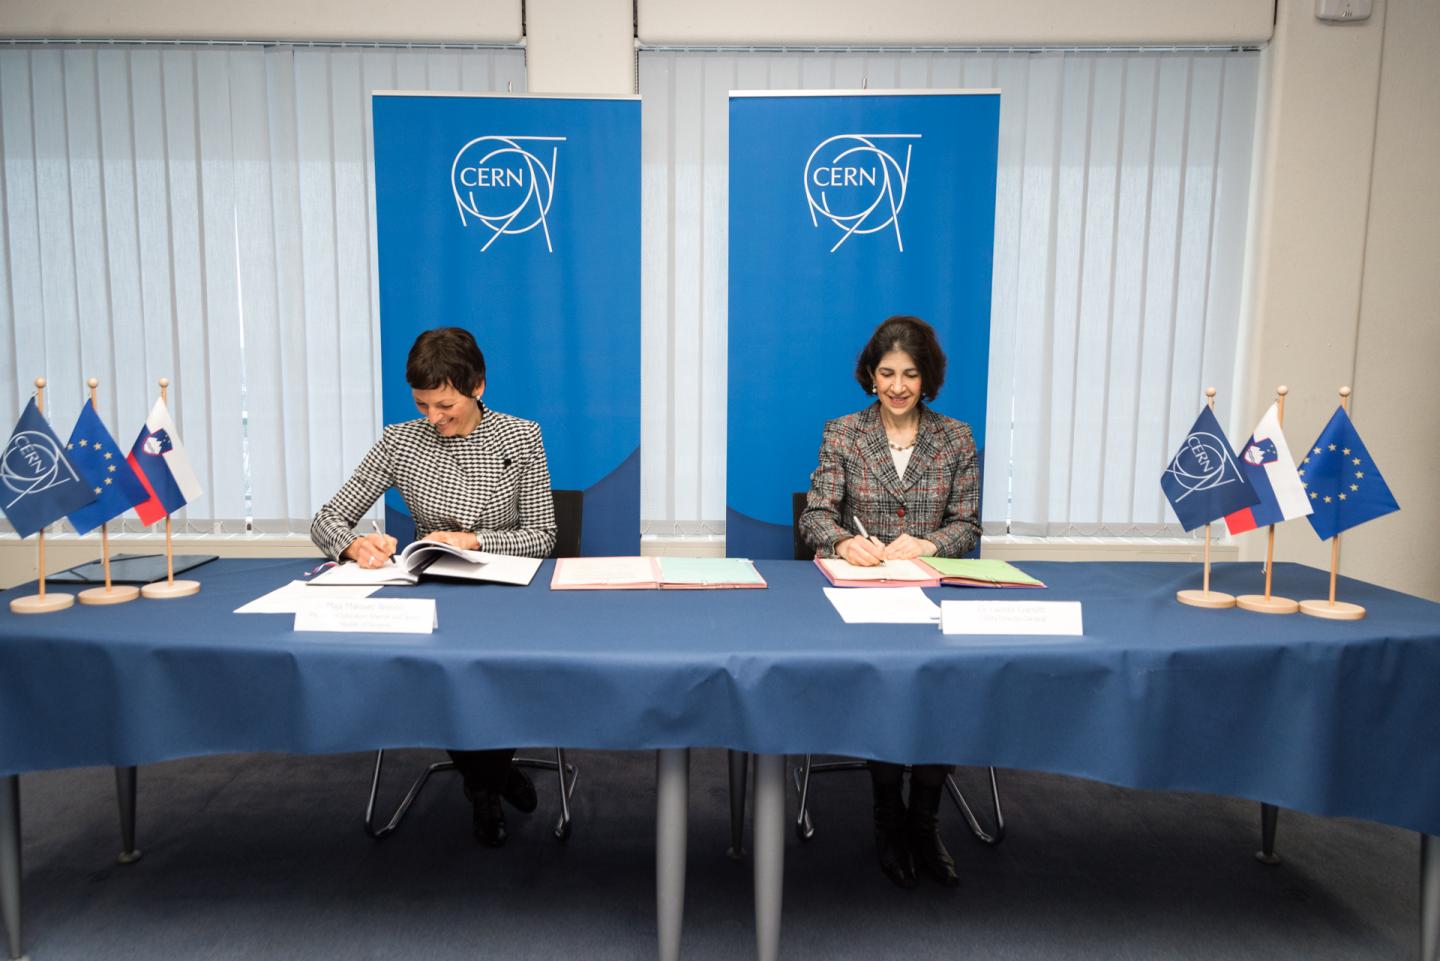 Slovenia to enter the Associate Member State family of CERN